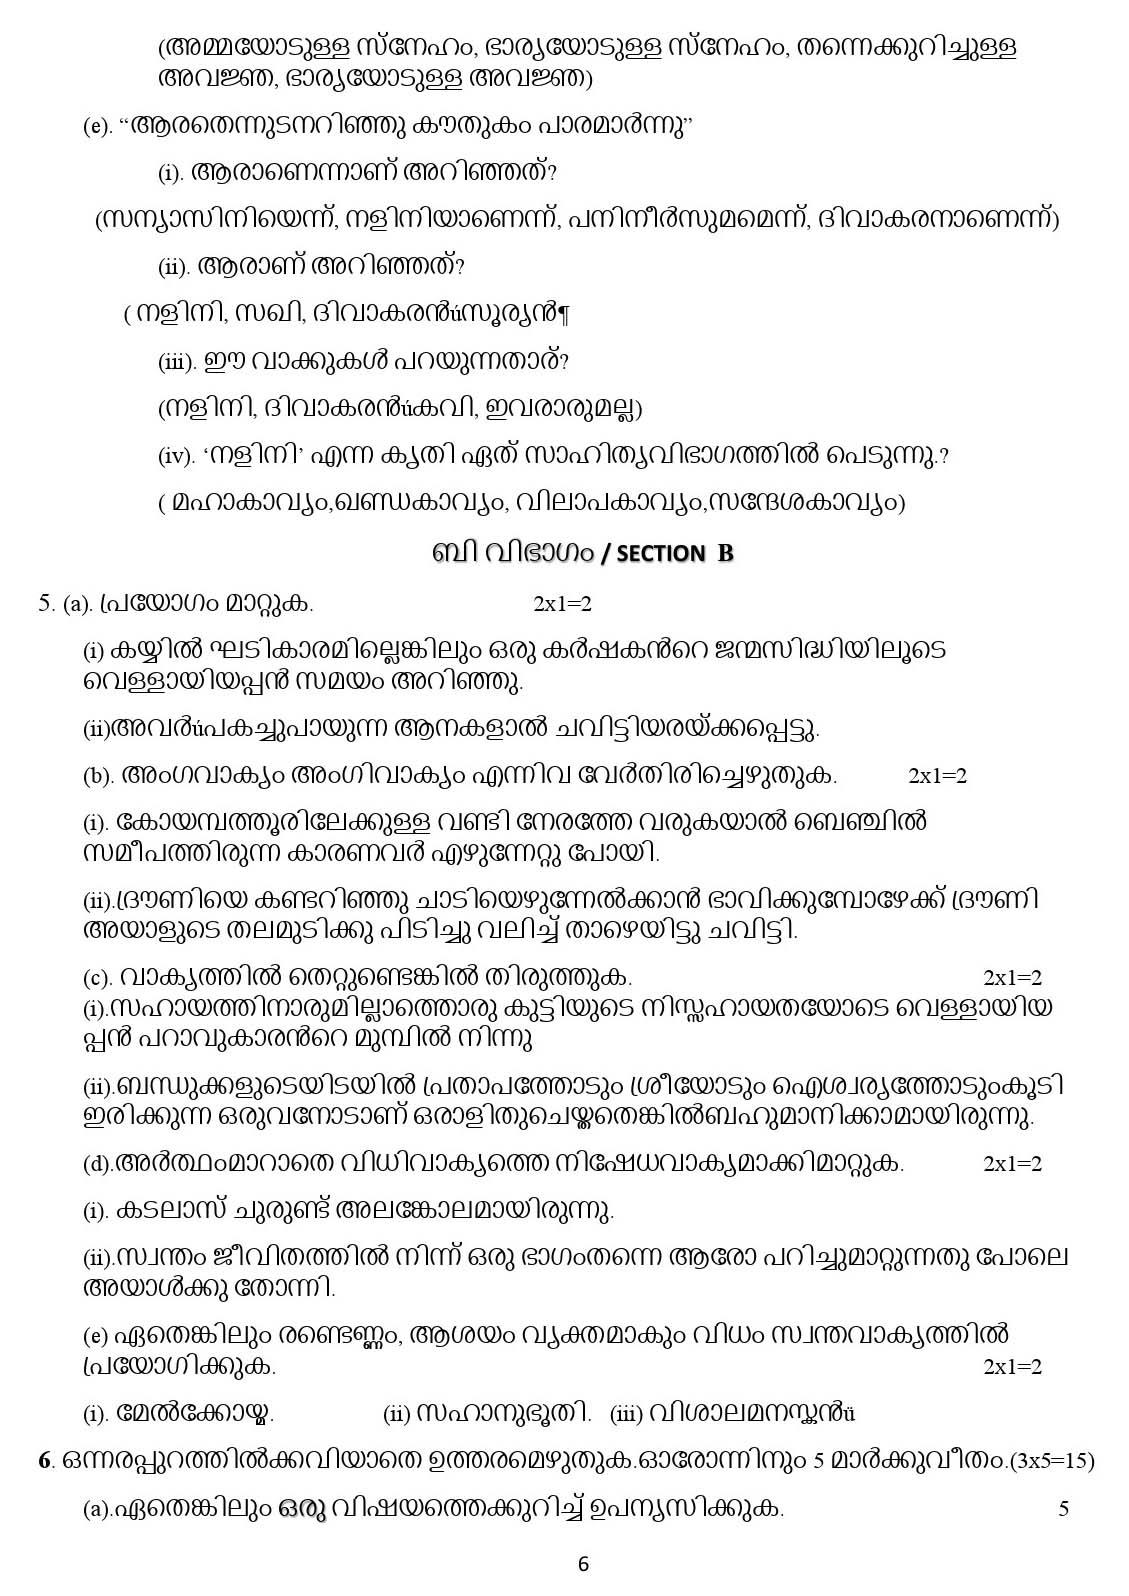 Malayalam CBSE Class X Sample Question Paper 2020 21 - Image 6